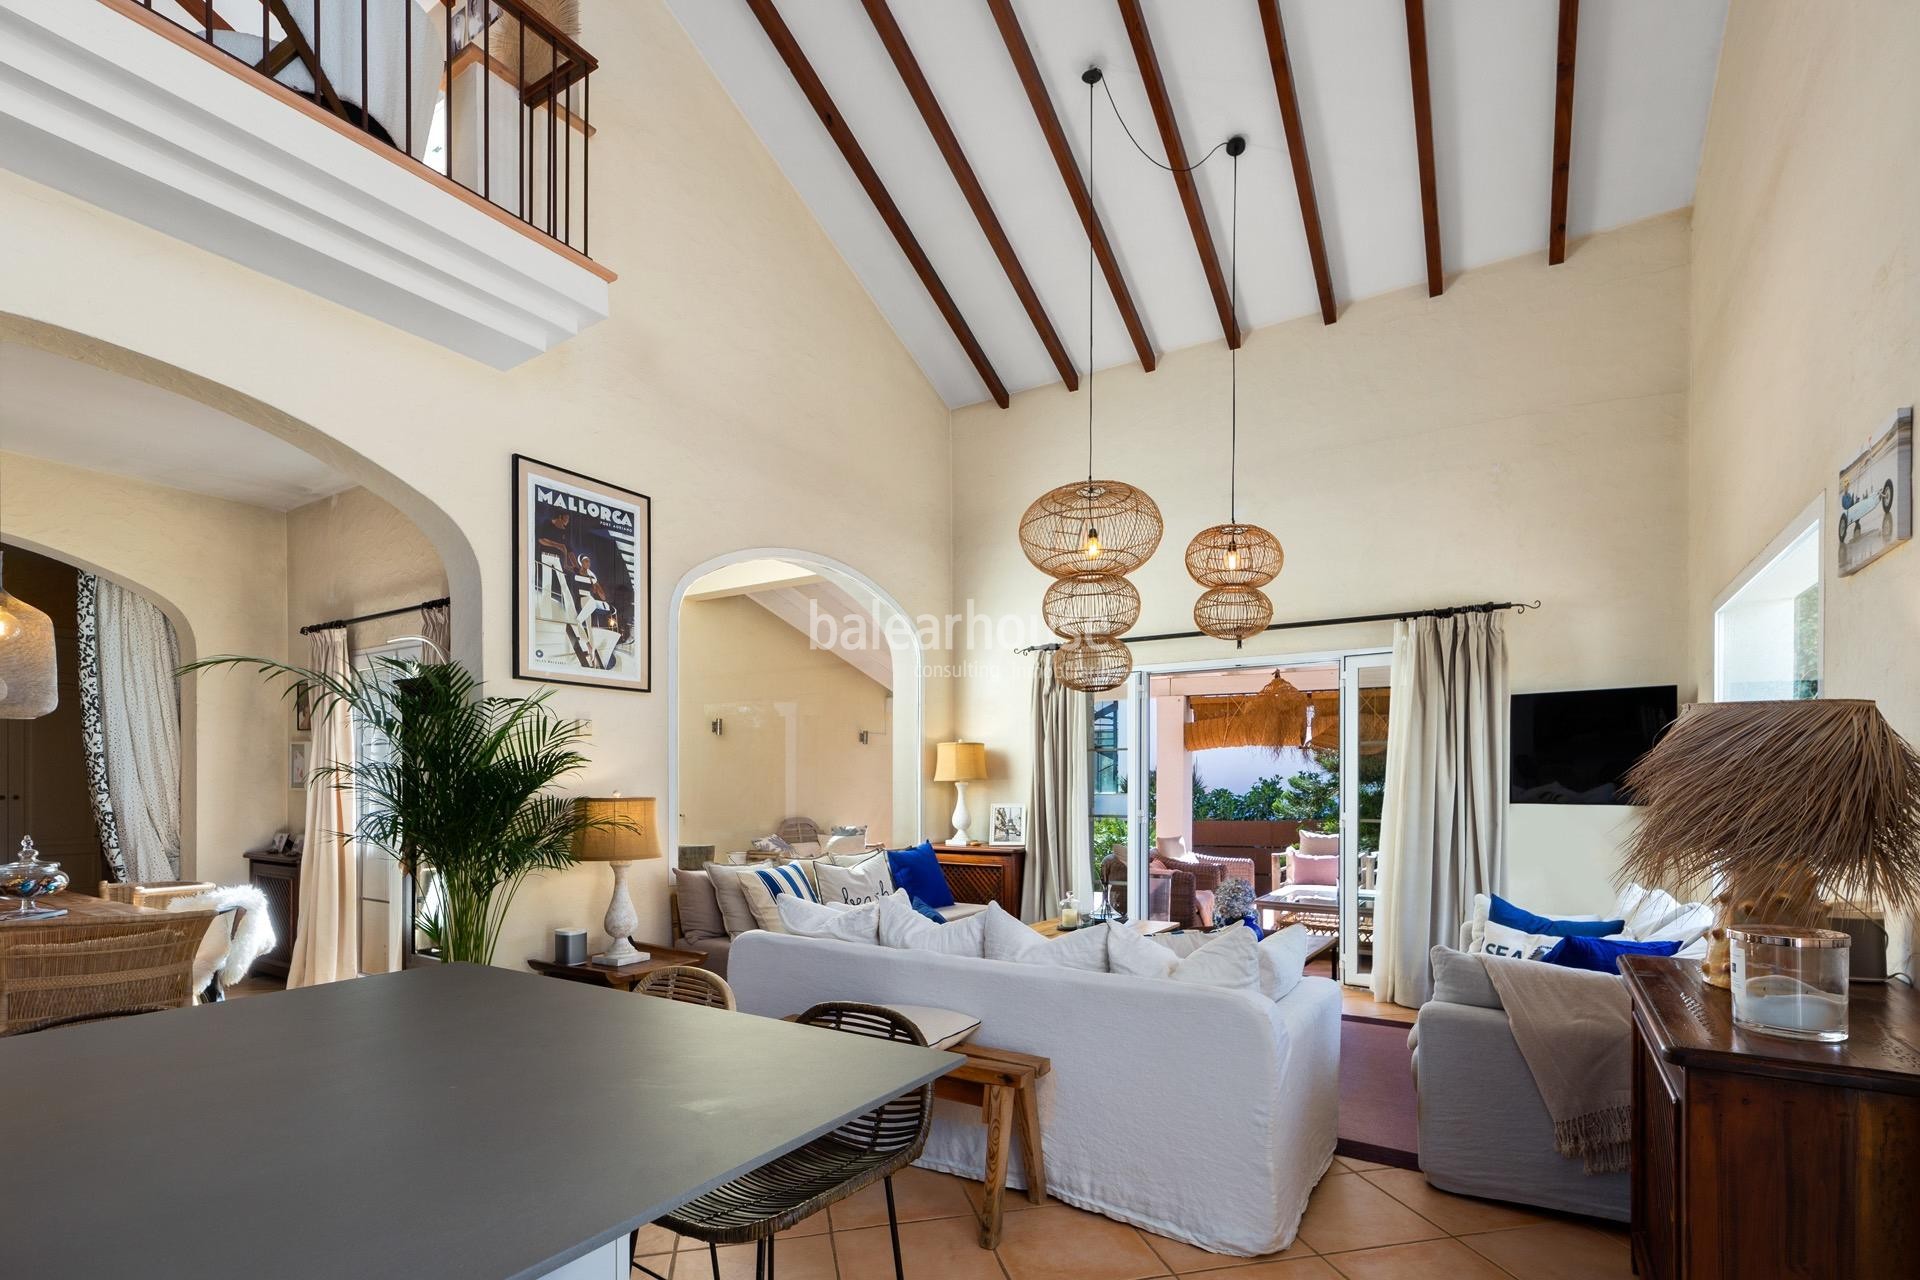 Beautiful mediterranean style villa perfect for families in Nova Santa Ponsa